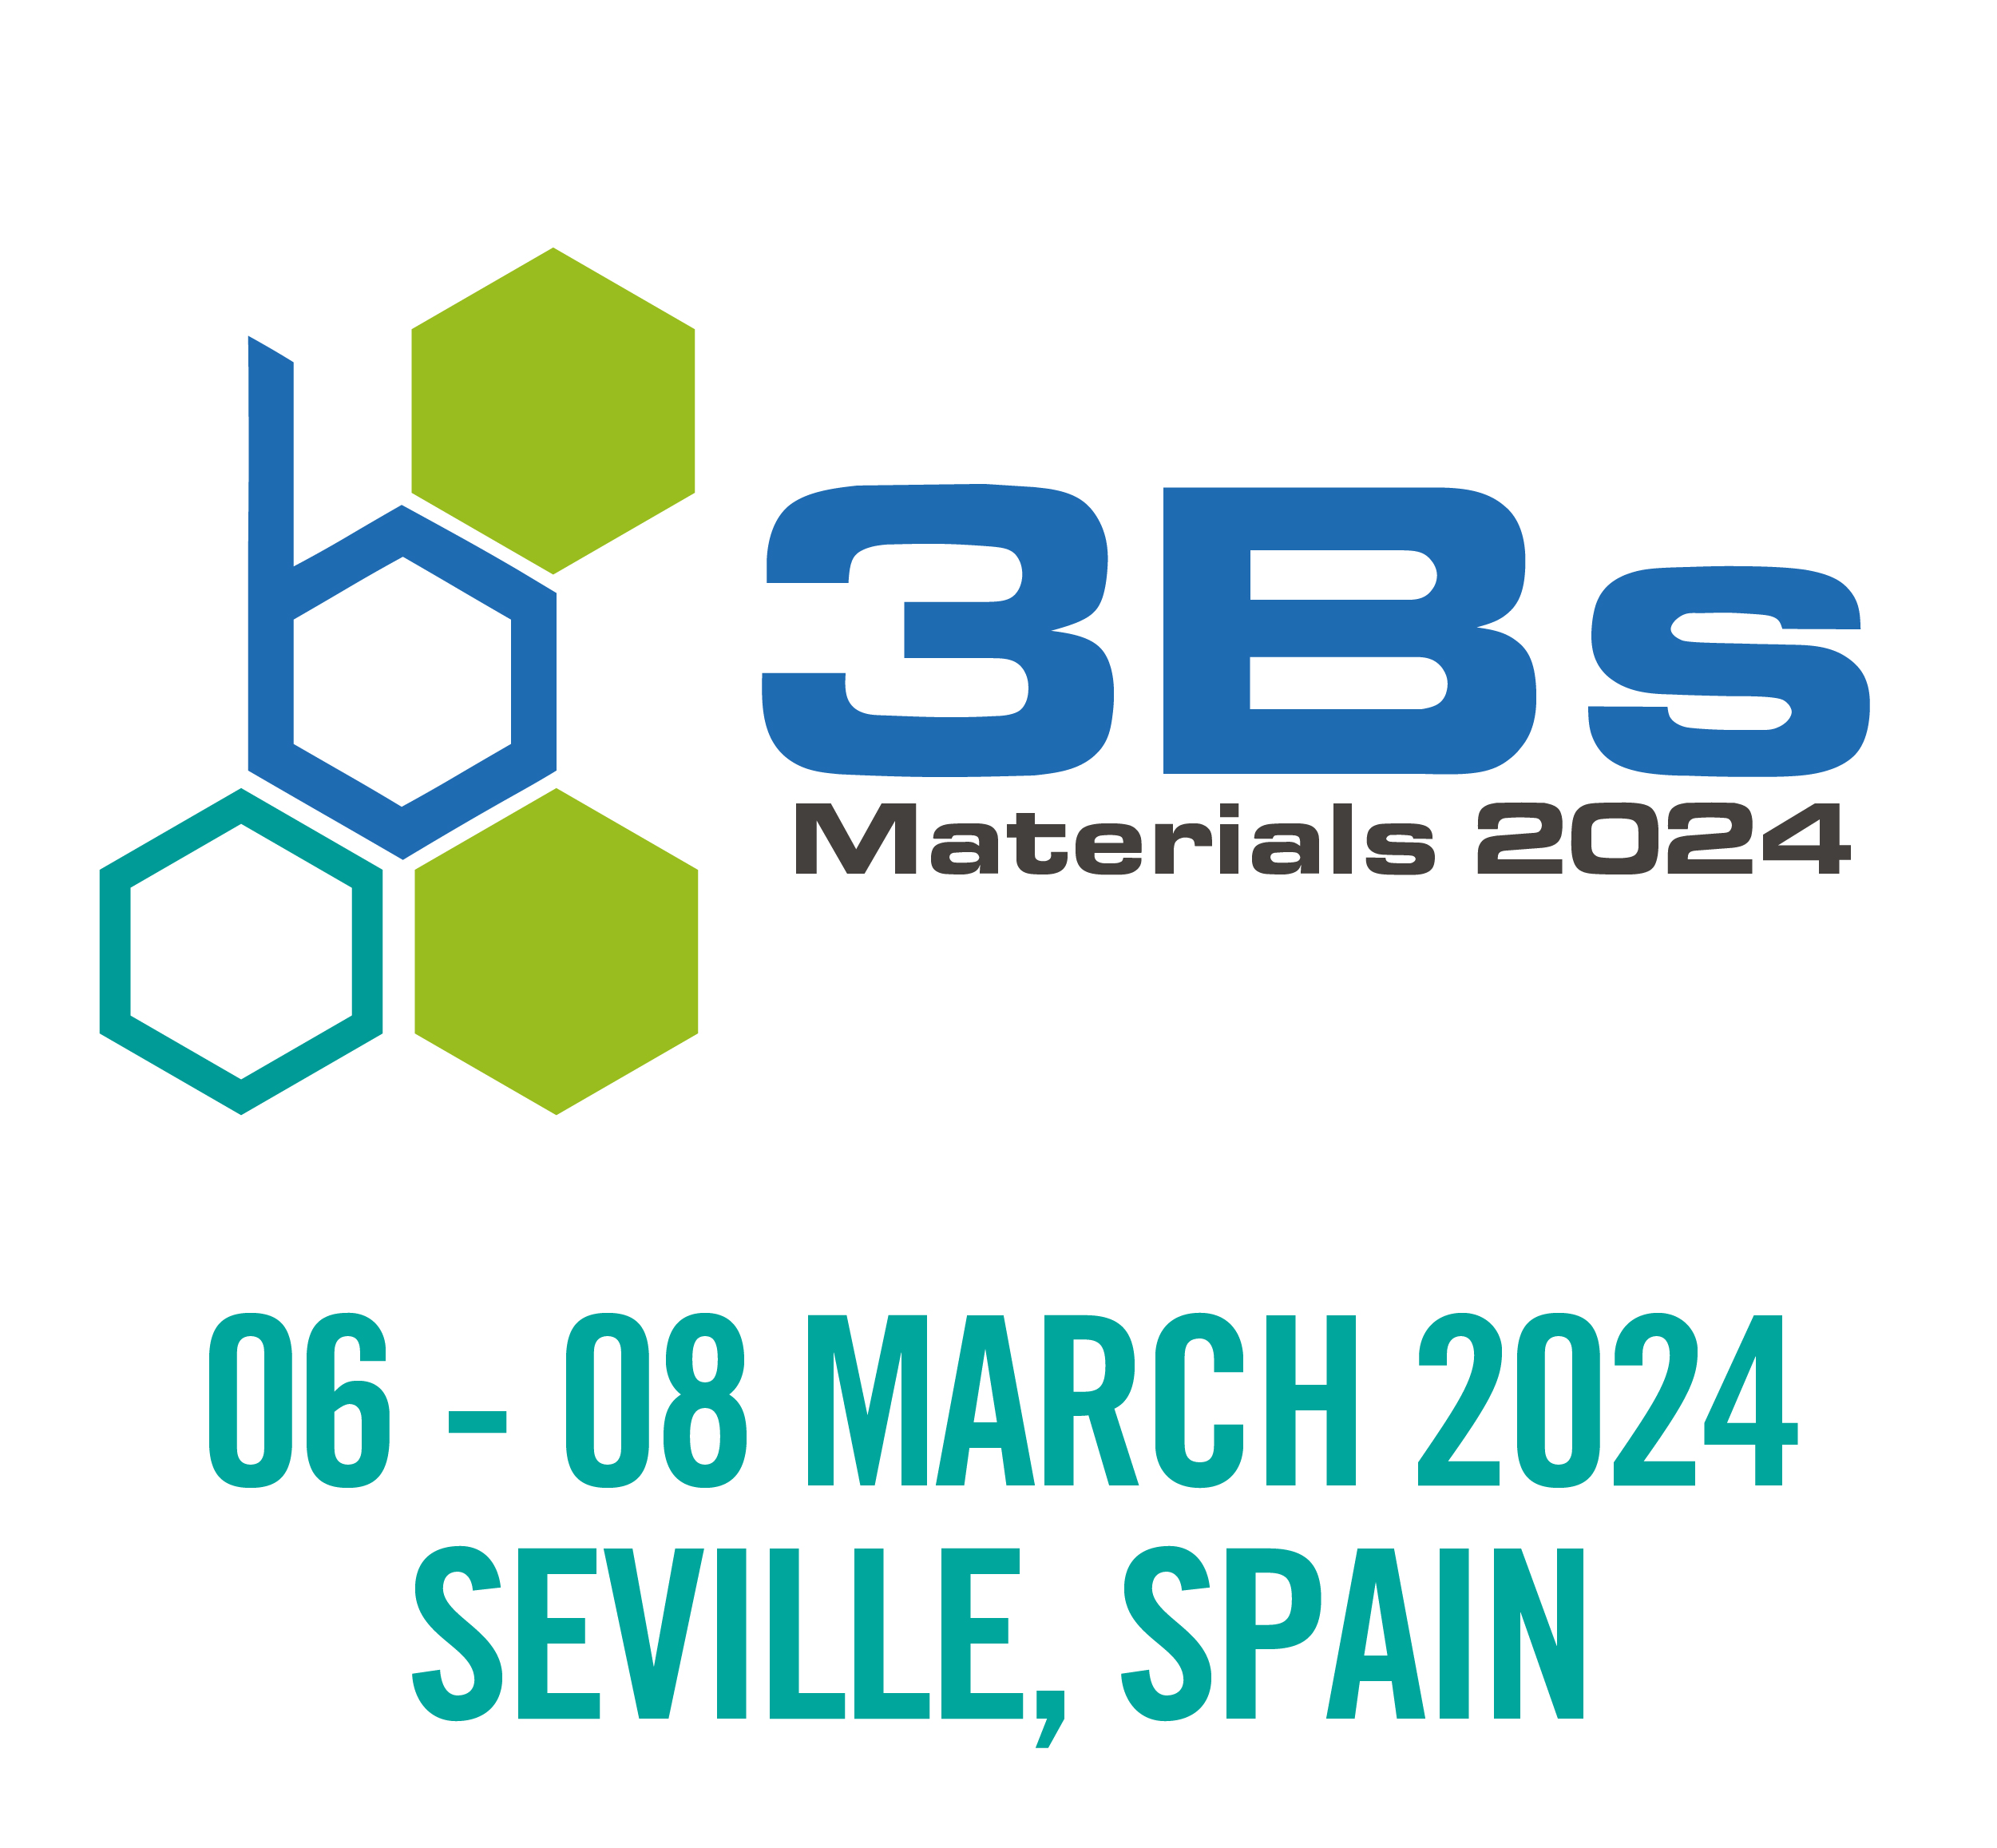 Biomaterials, Biodegradables and Biomimetics International Conference - 3Bs Materials 2024